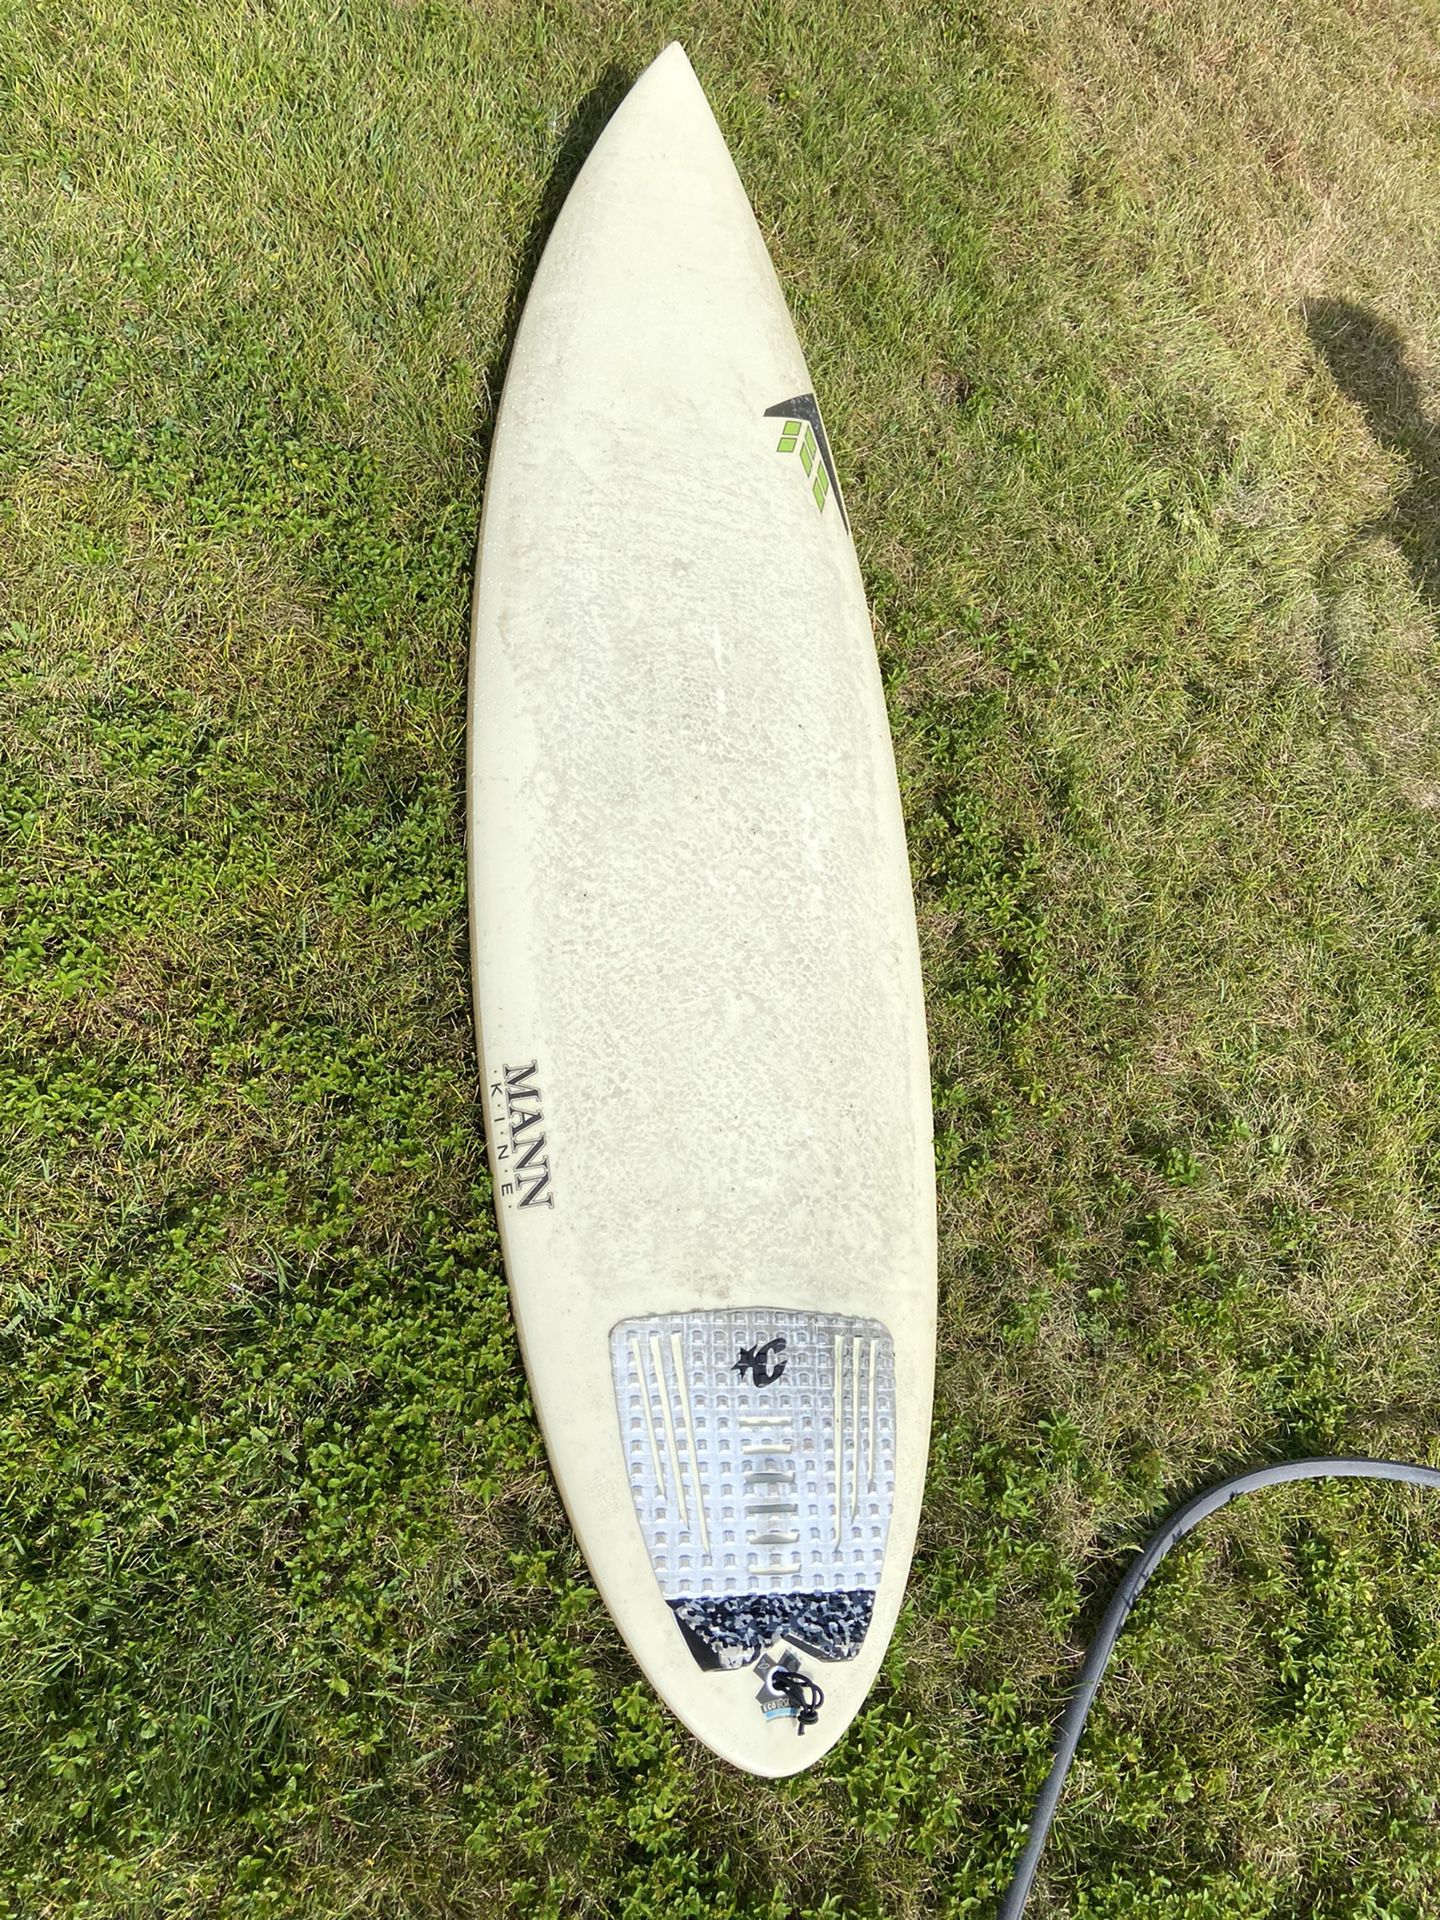 6’10 Uni-brow Firewire (MANN KINE) Surfboard 